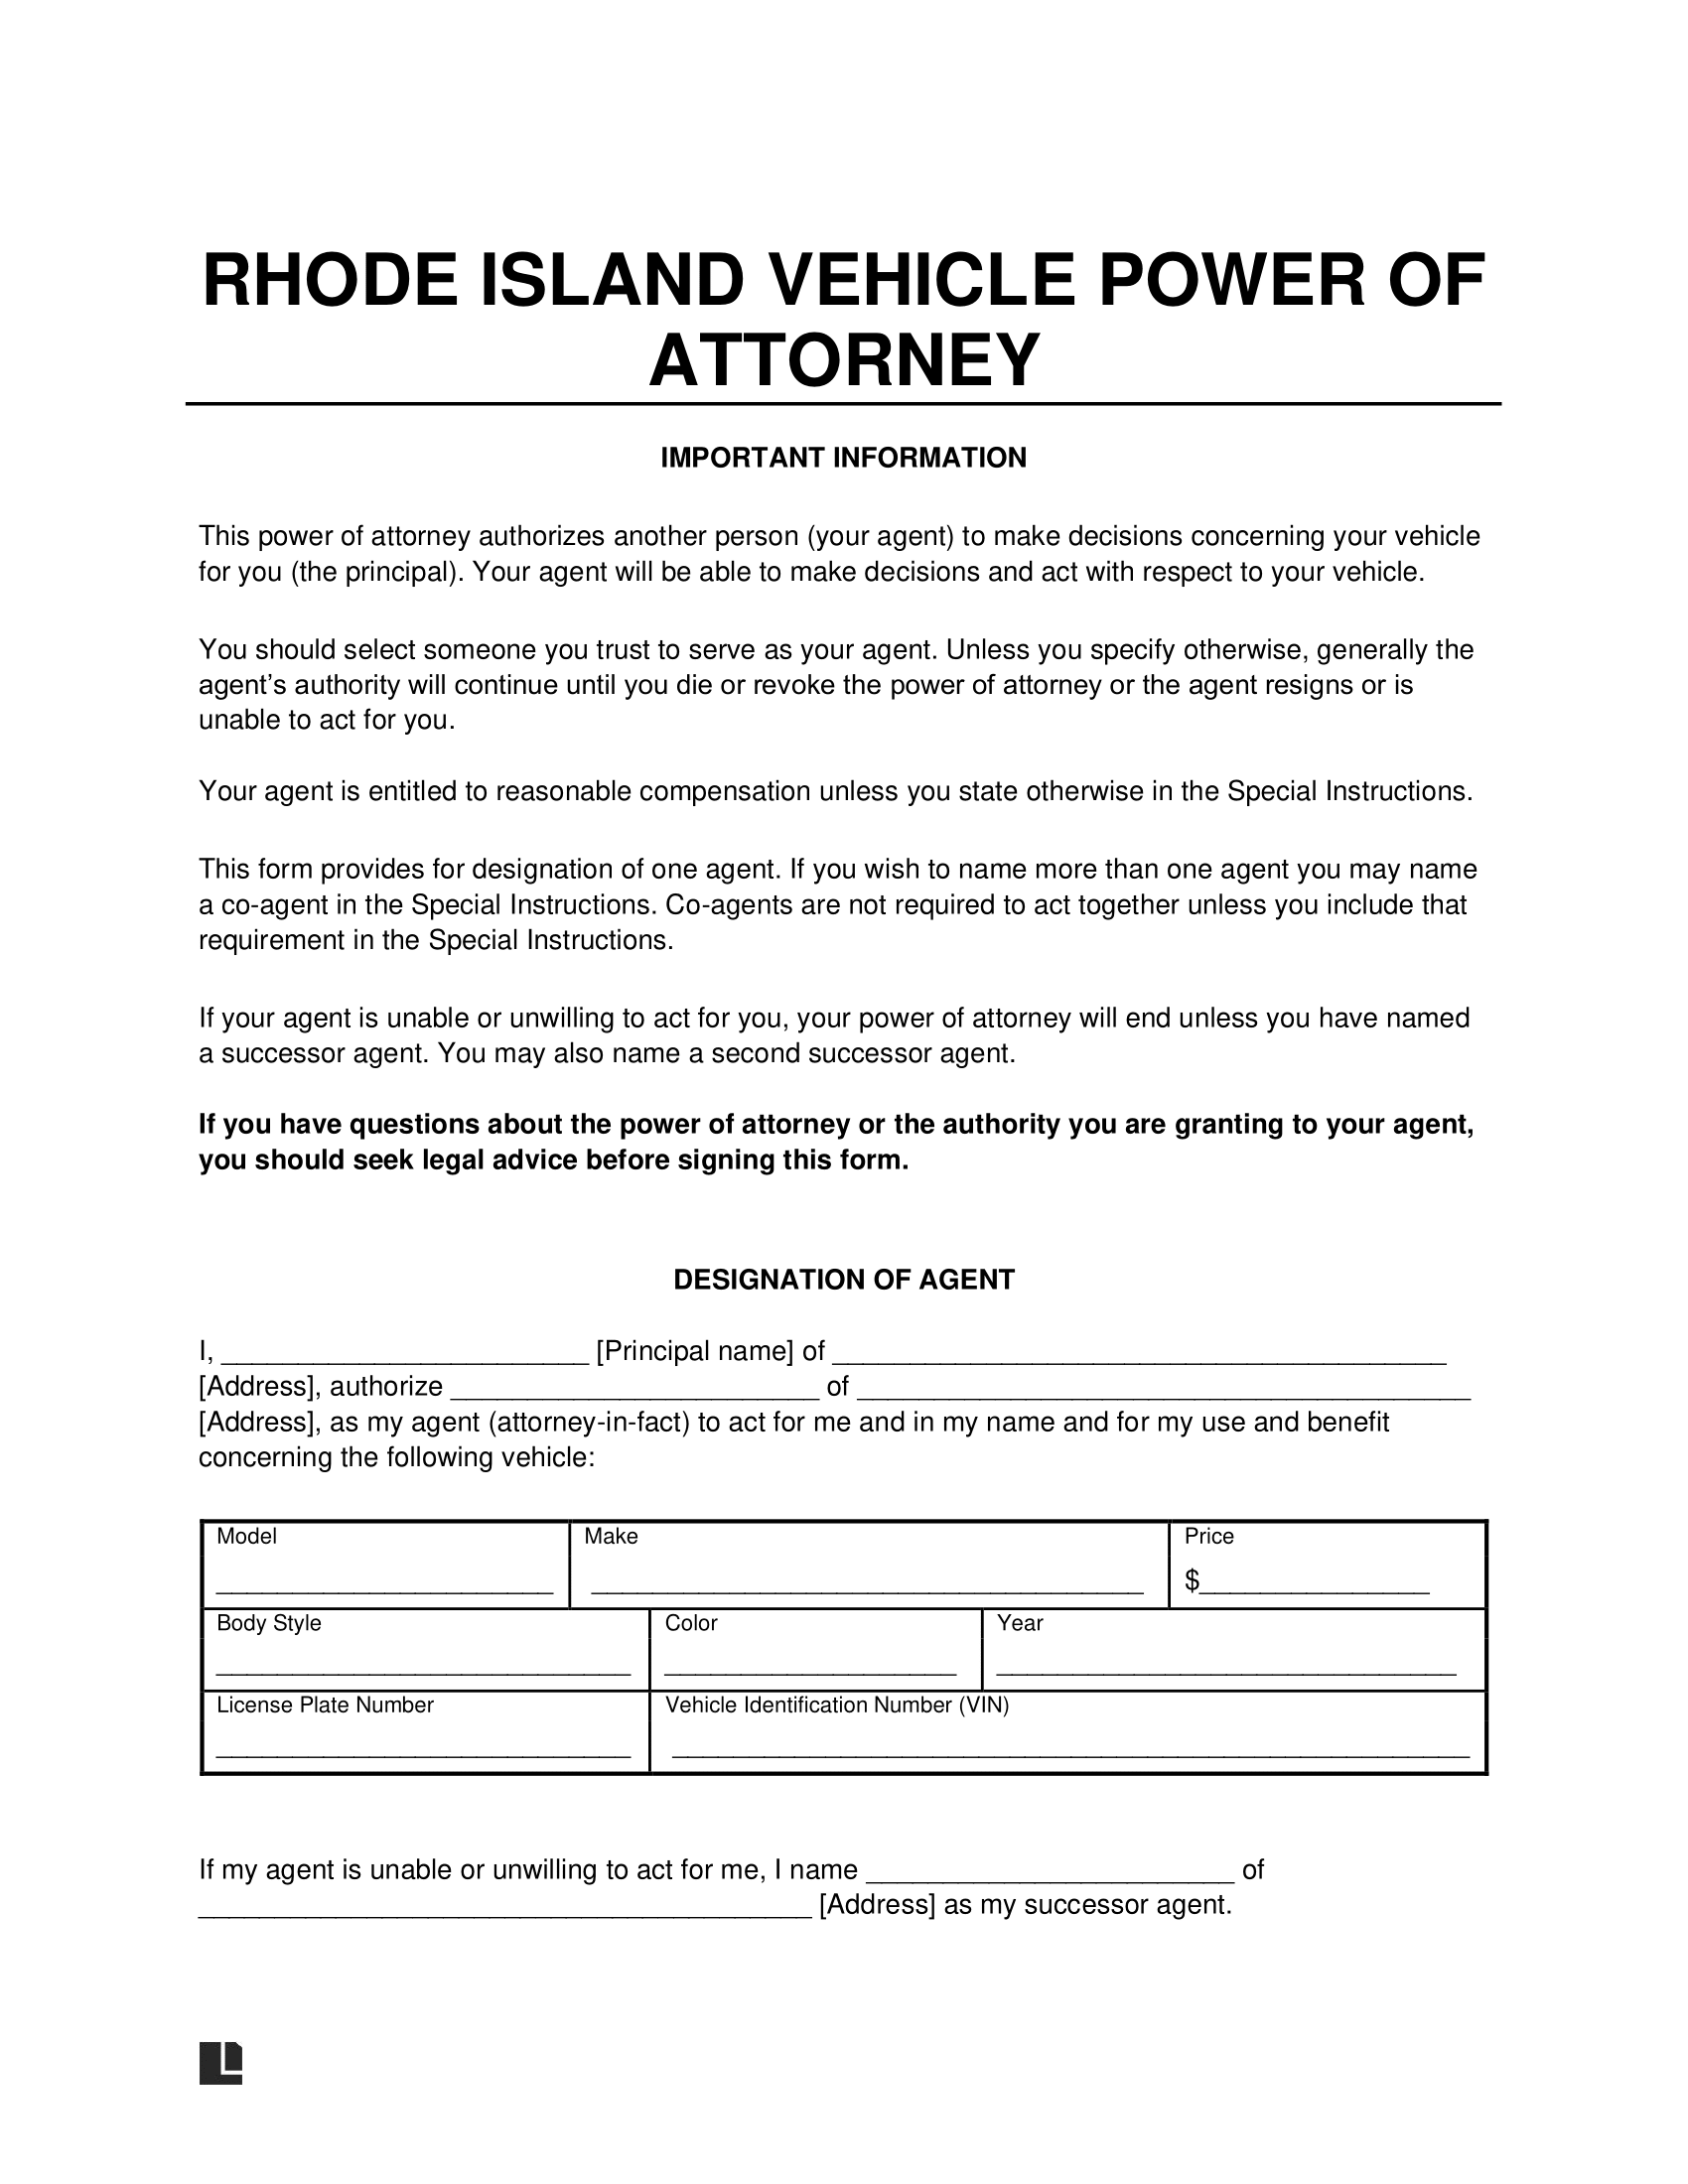 Rhode Island Motor Vehicle Power of Attorney Form